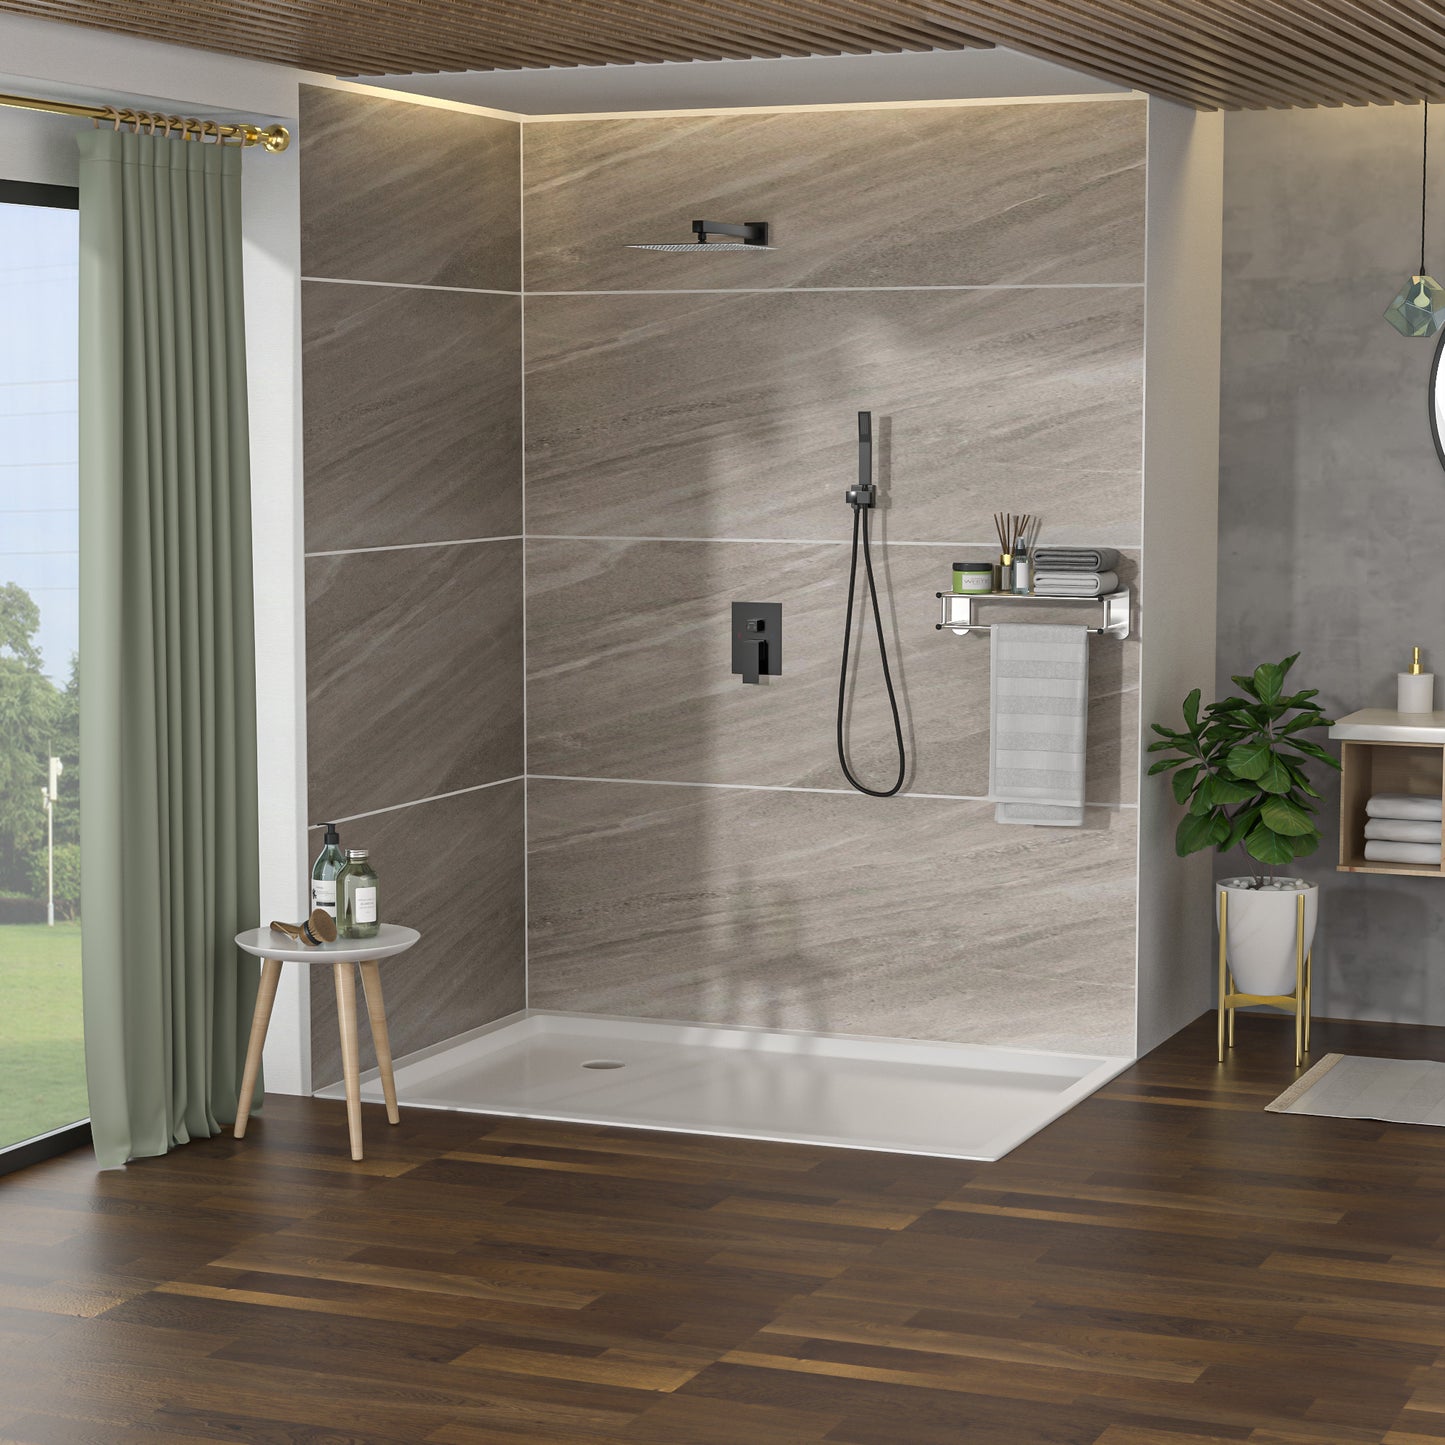 Shower set - 10 inch square shower set, Dual Shower Heads, simple classic shape, Matte Black